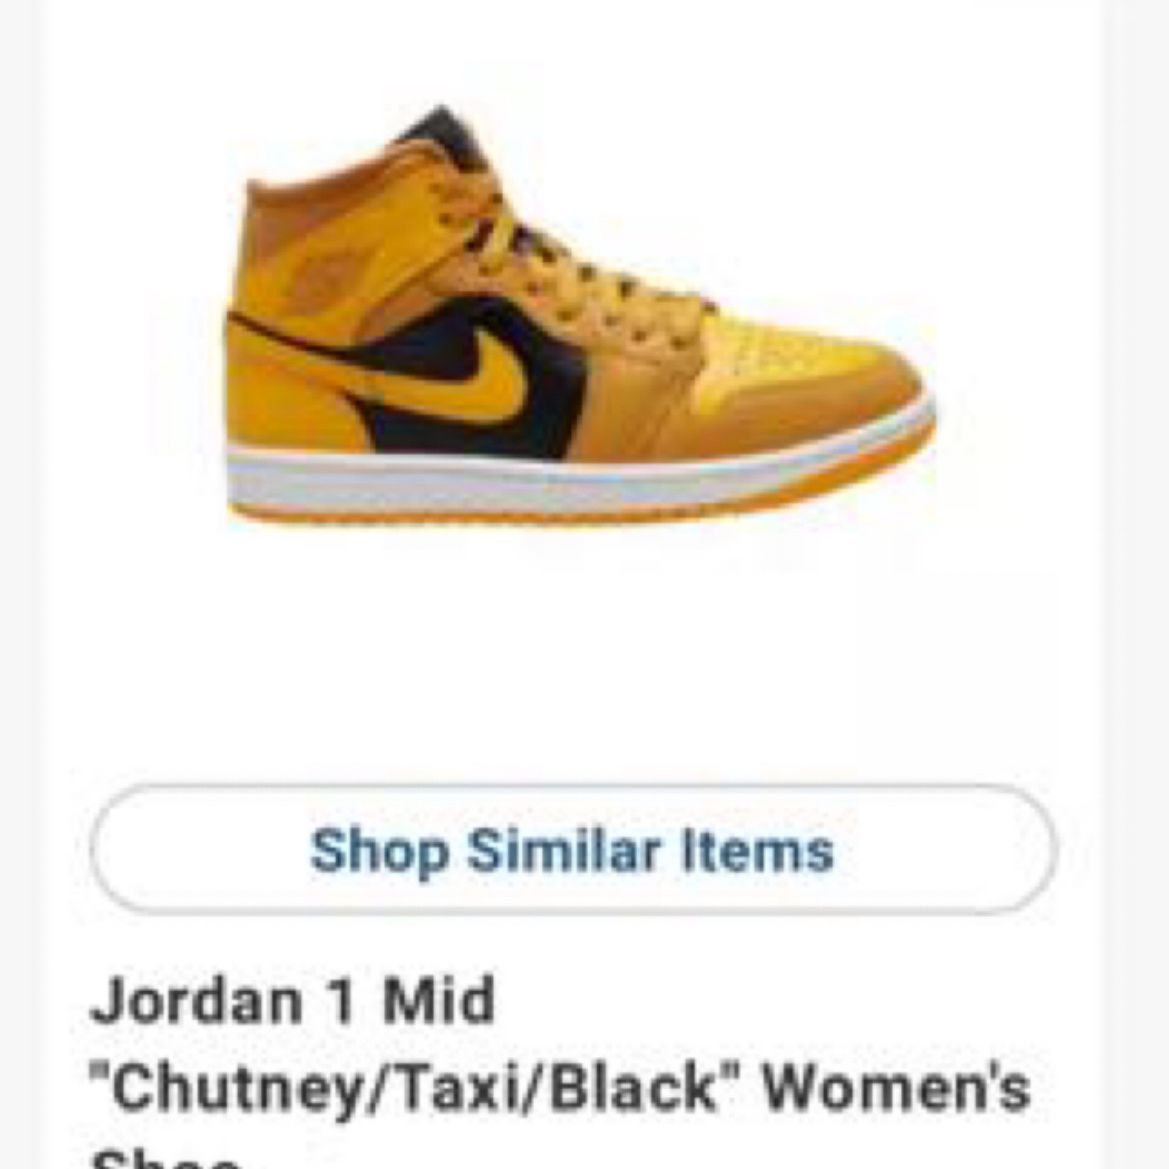 Jordan 1 Mid "Chutney/Taxi/Black